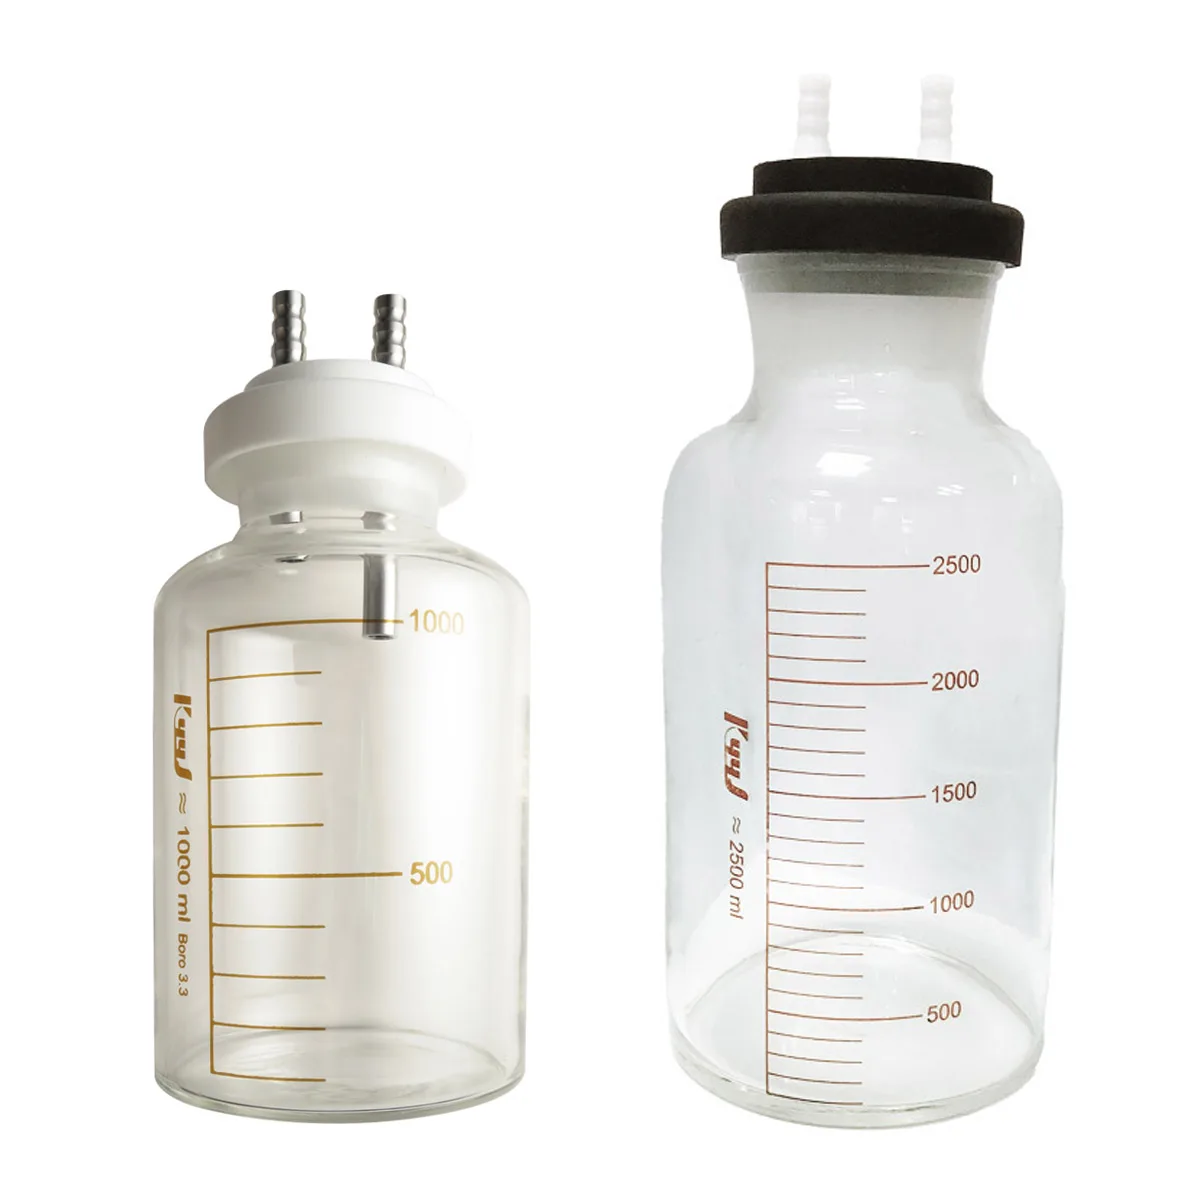 1000/2500 ML Sterilization Bottle Fat Collection Canister Syringe Display Racks Holder Autoclavable Liposuction Supplies 1pcs